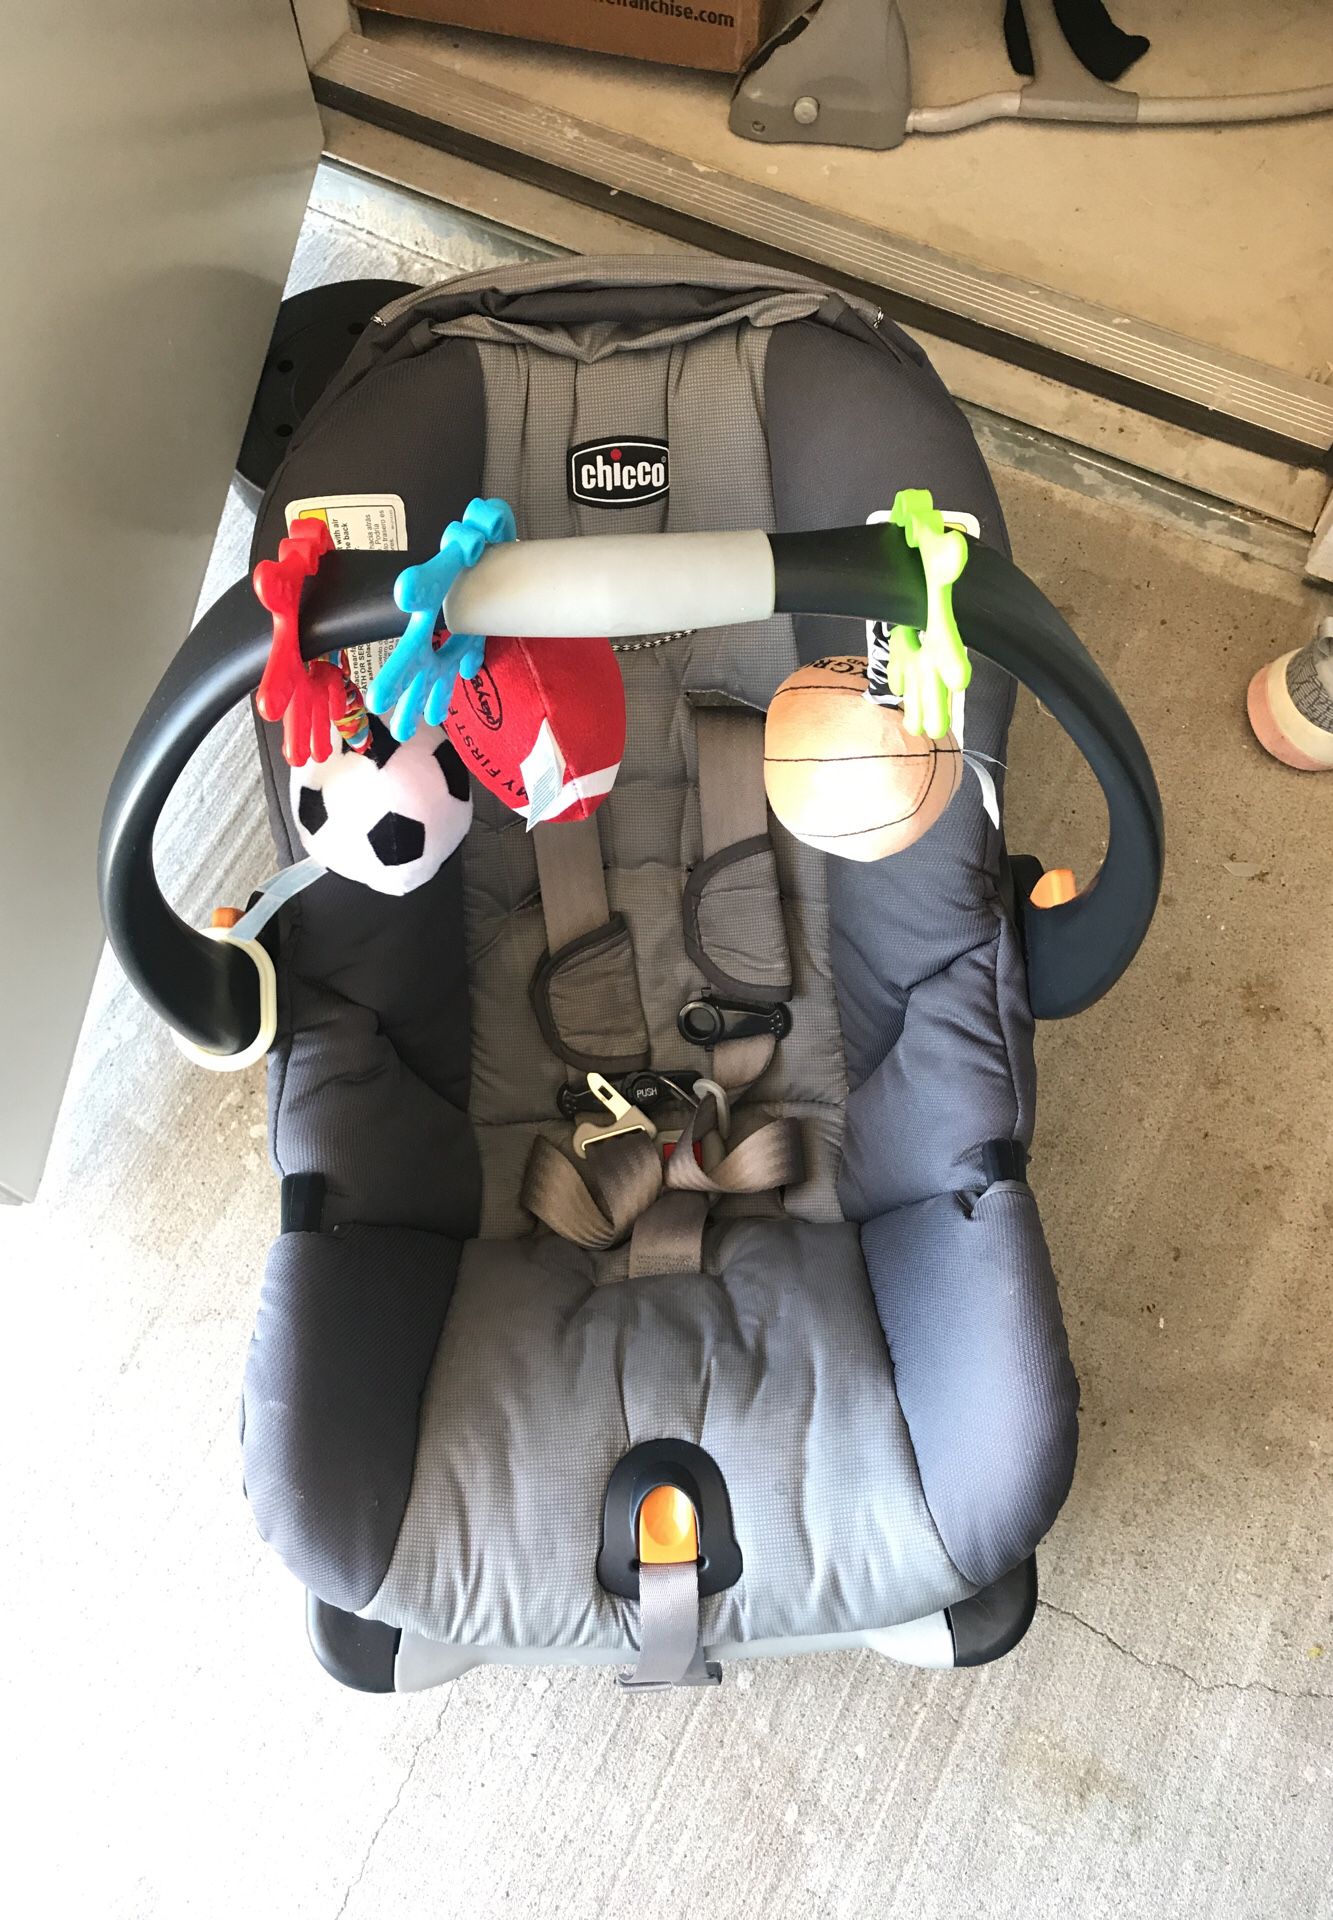 Car seat infant